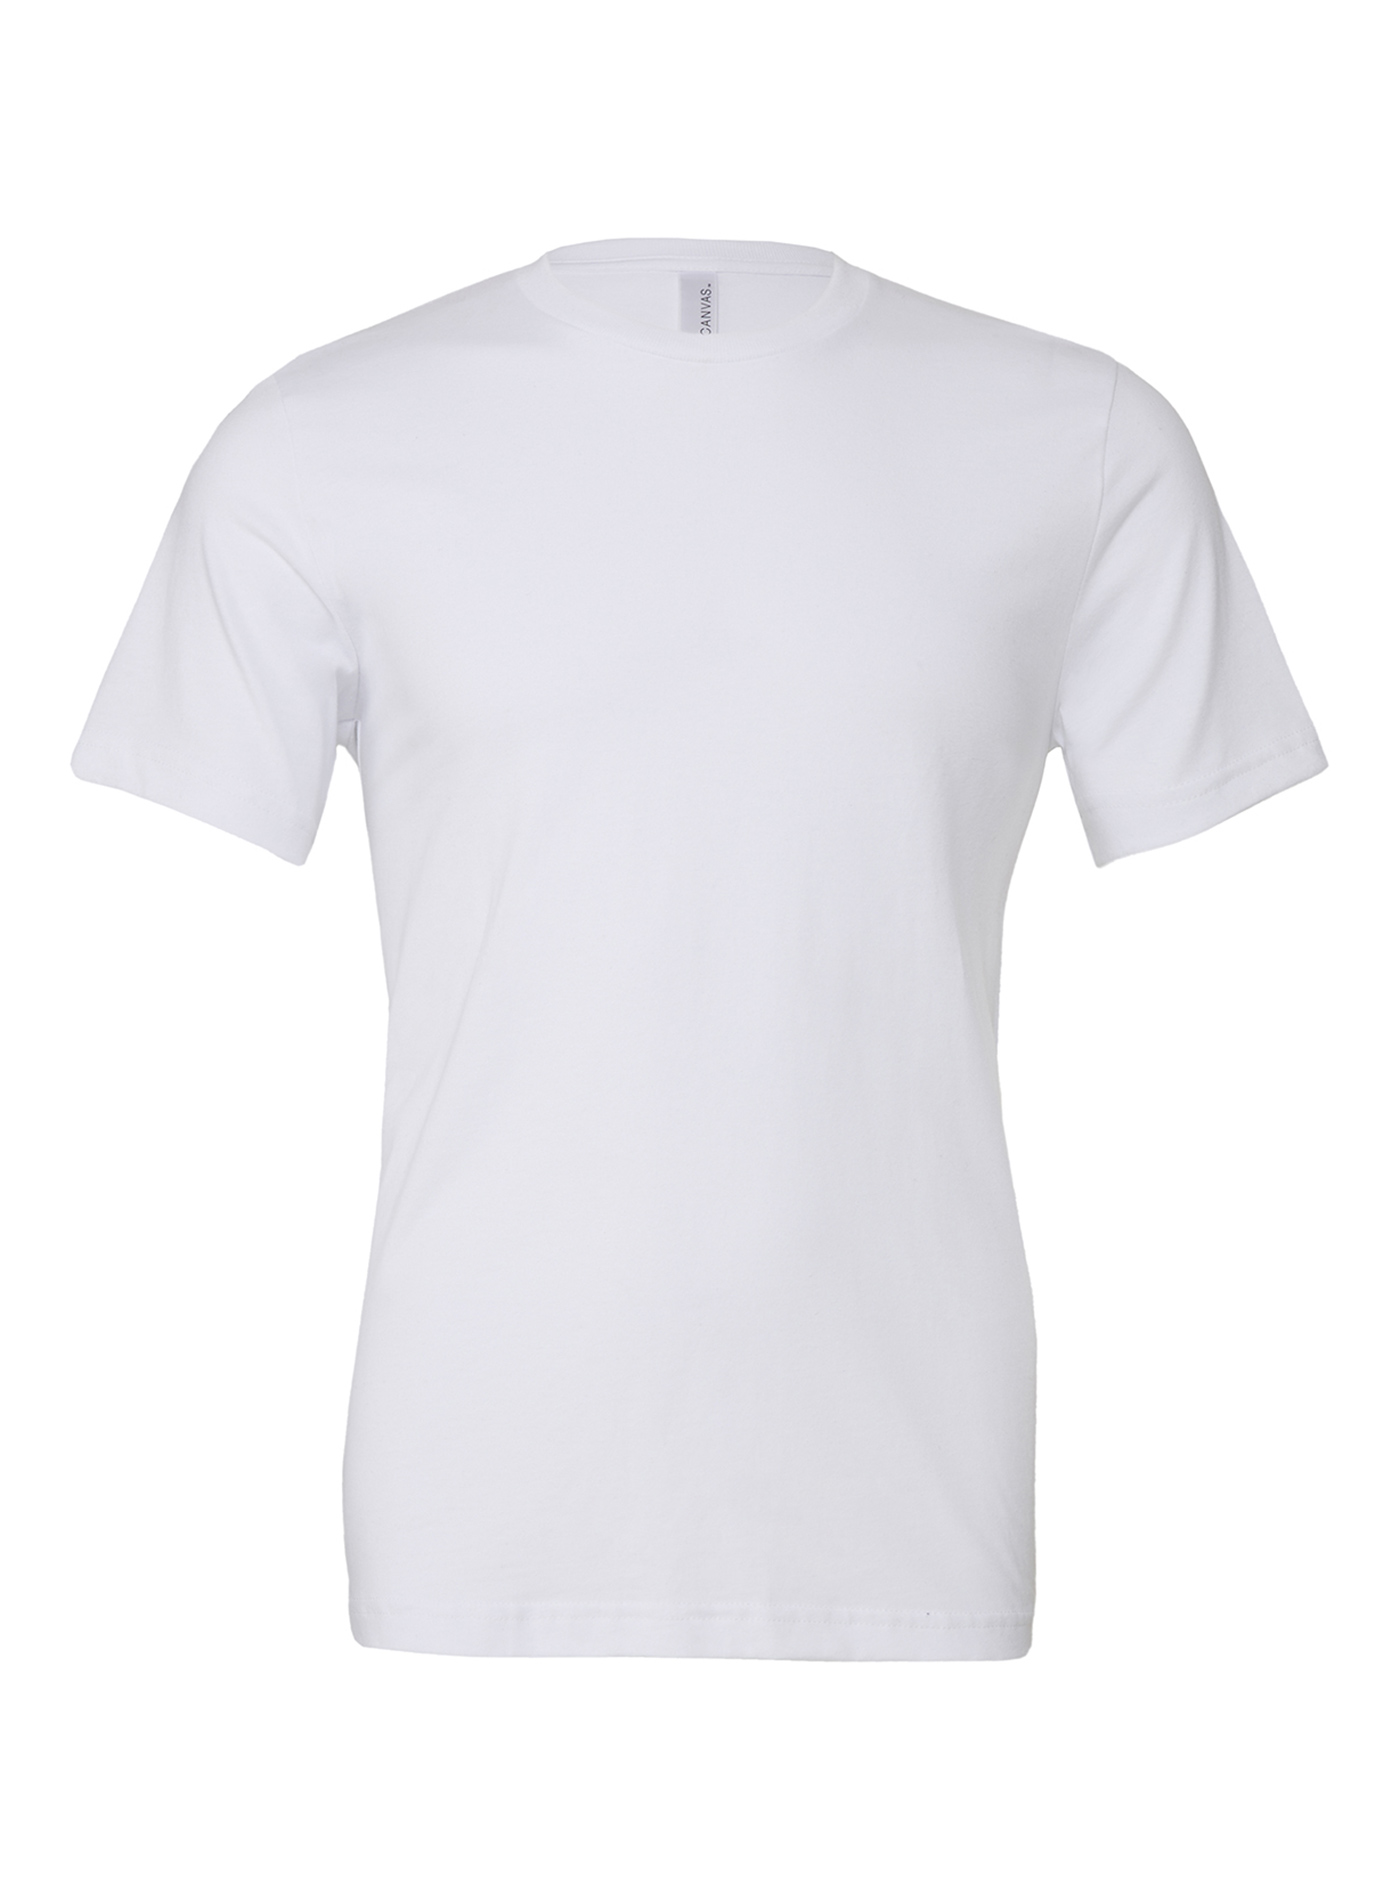 Unisex tričko Jersey - Bílá XL